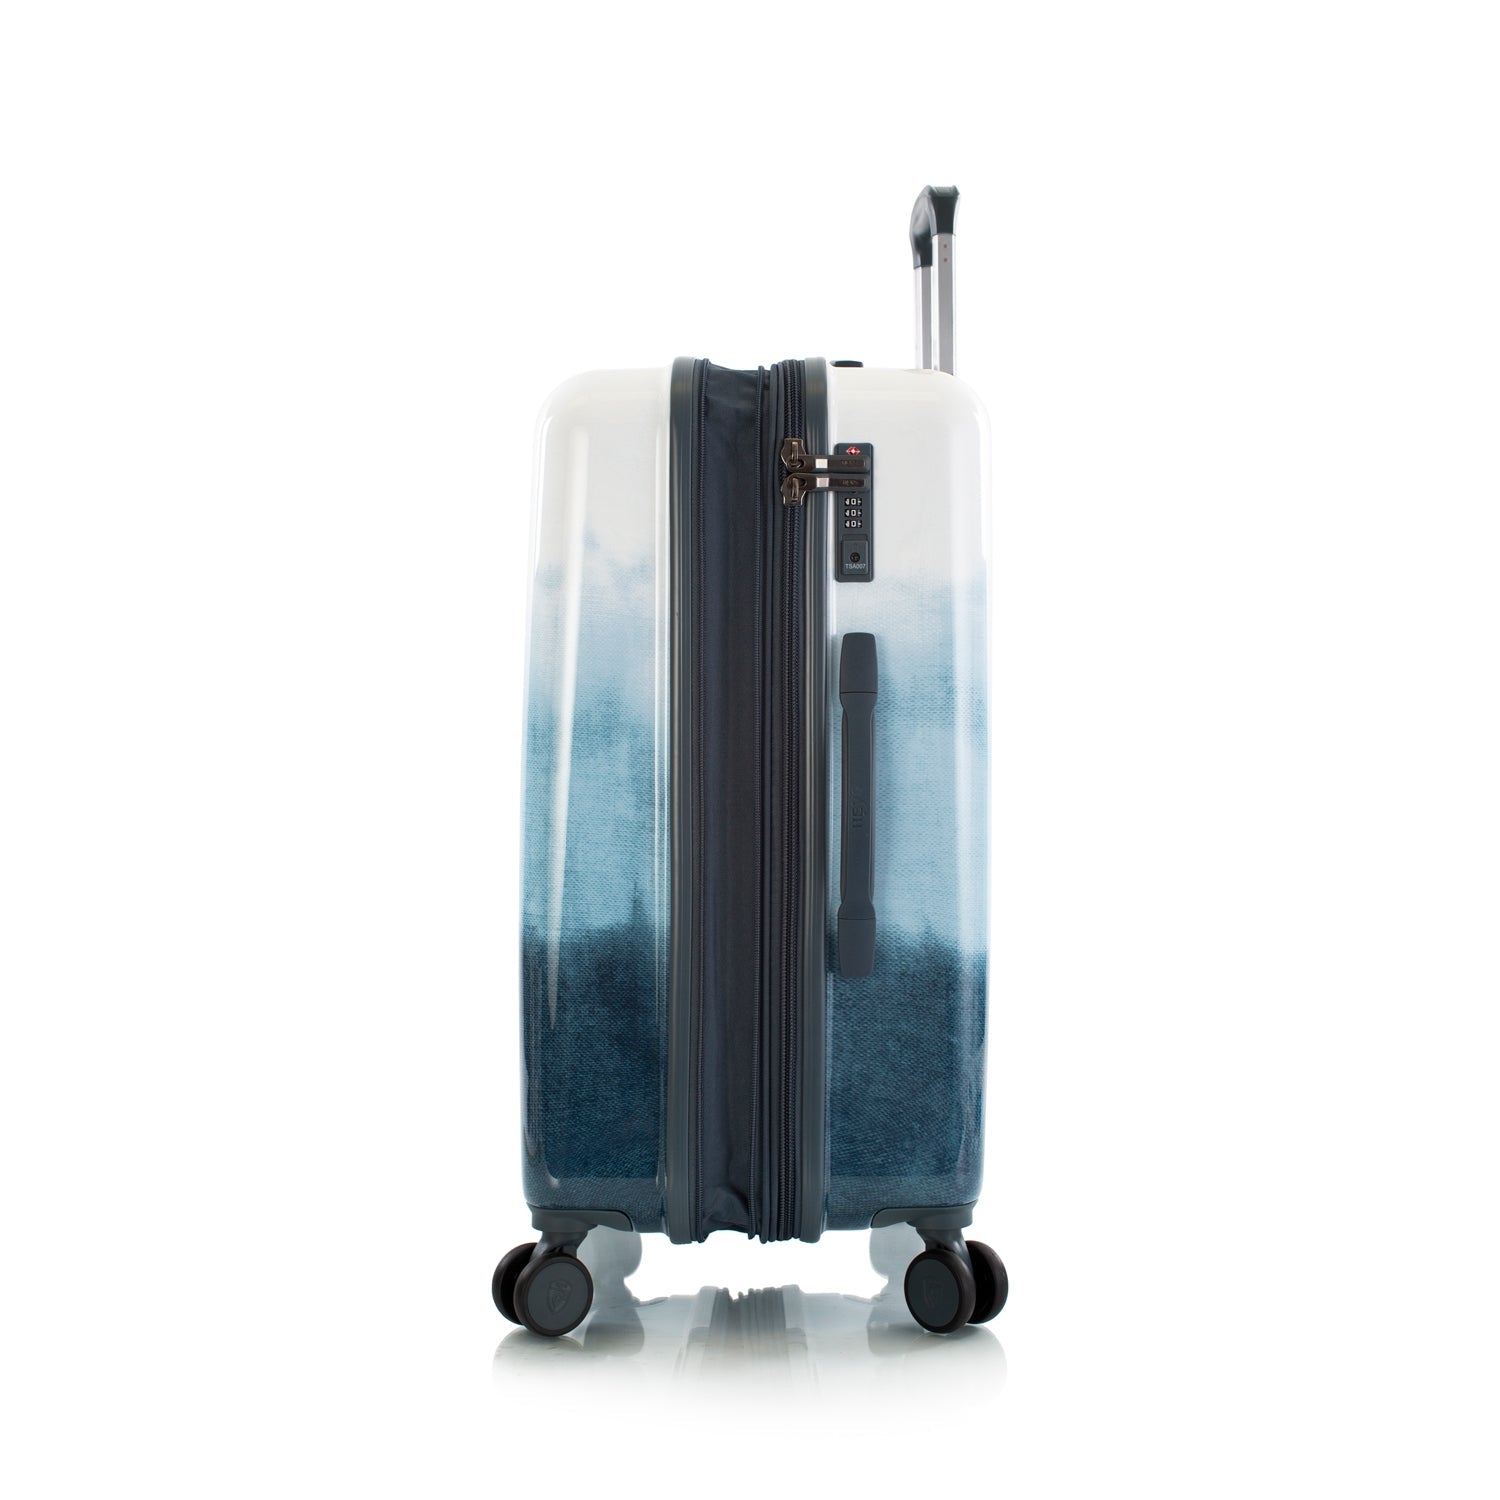 Fashion Spinner - Tie-Dye Blue 3 Piece Luggage Set